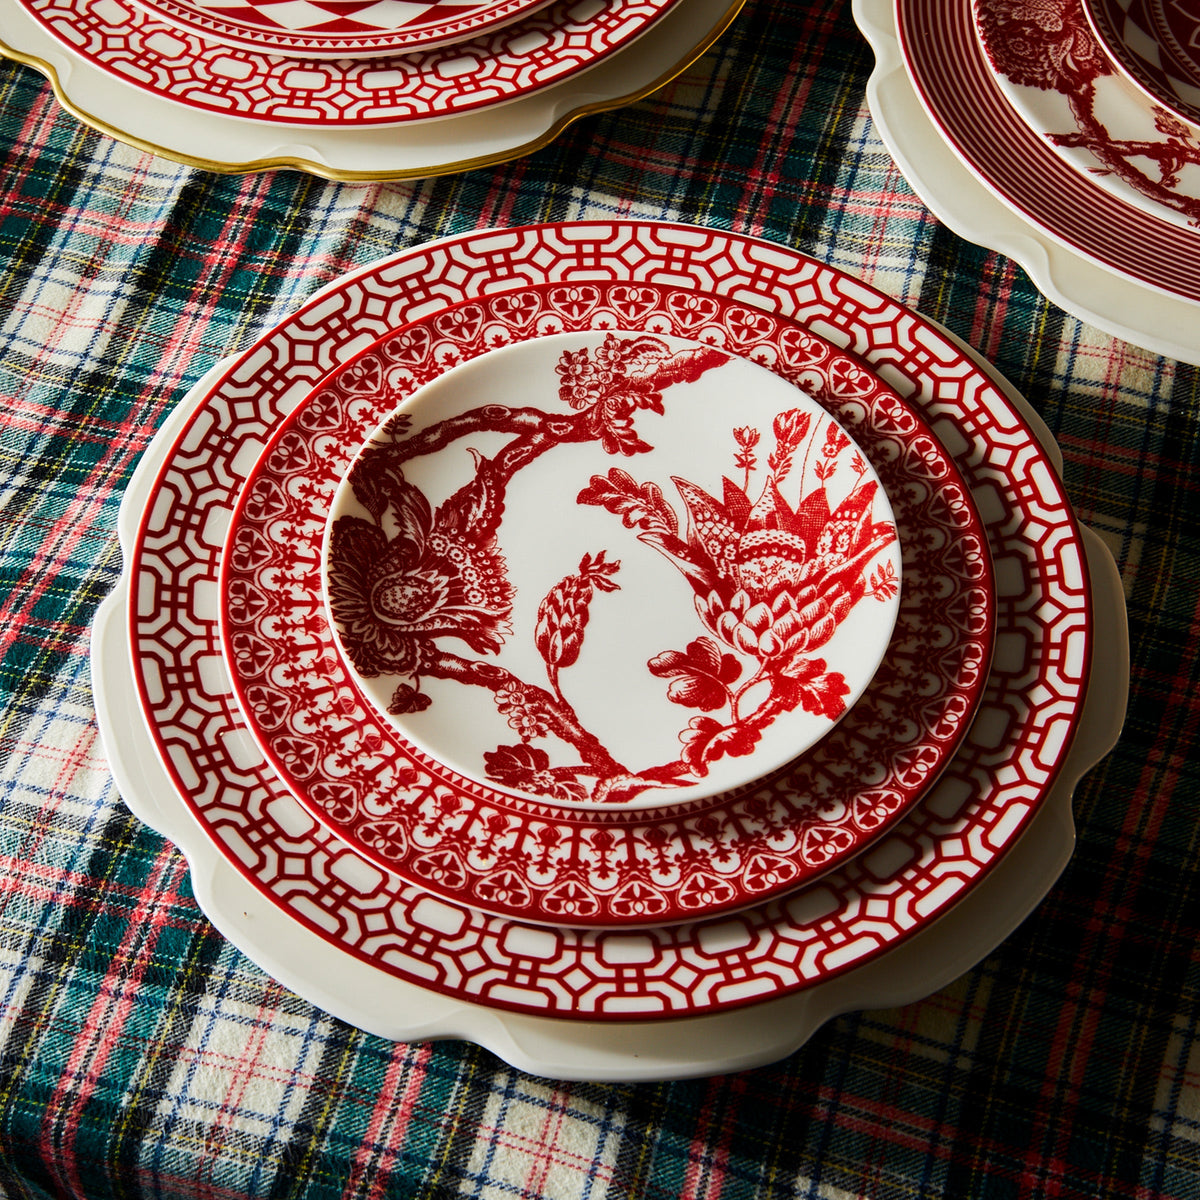 A polished Grace White Dinner Plate on a plaid tablecloth, exuding Caskata Artisanal Home.